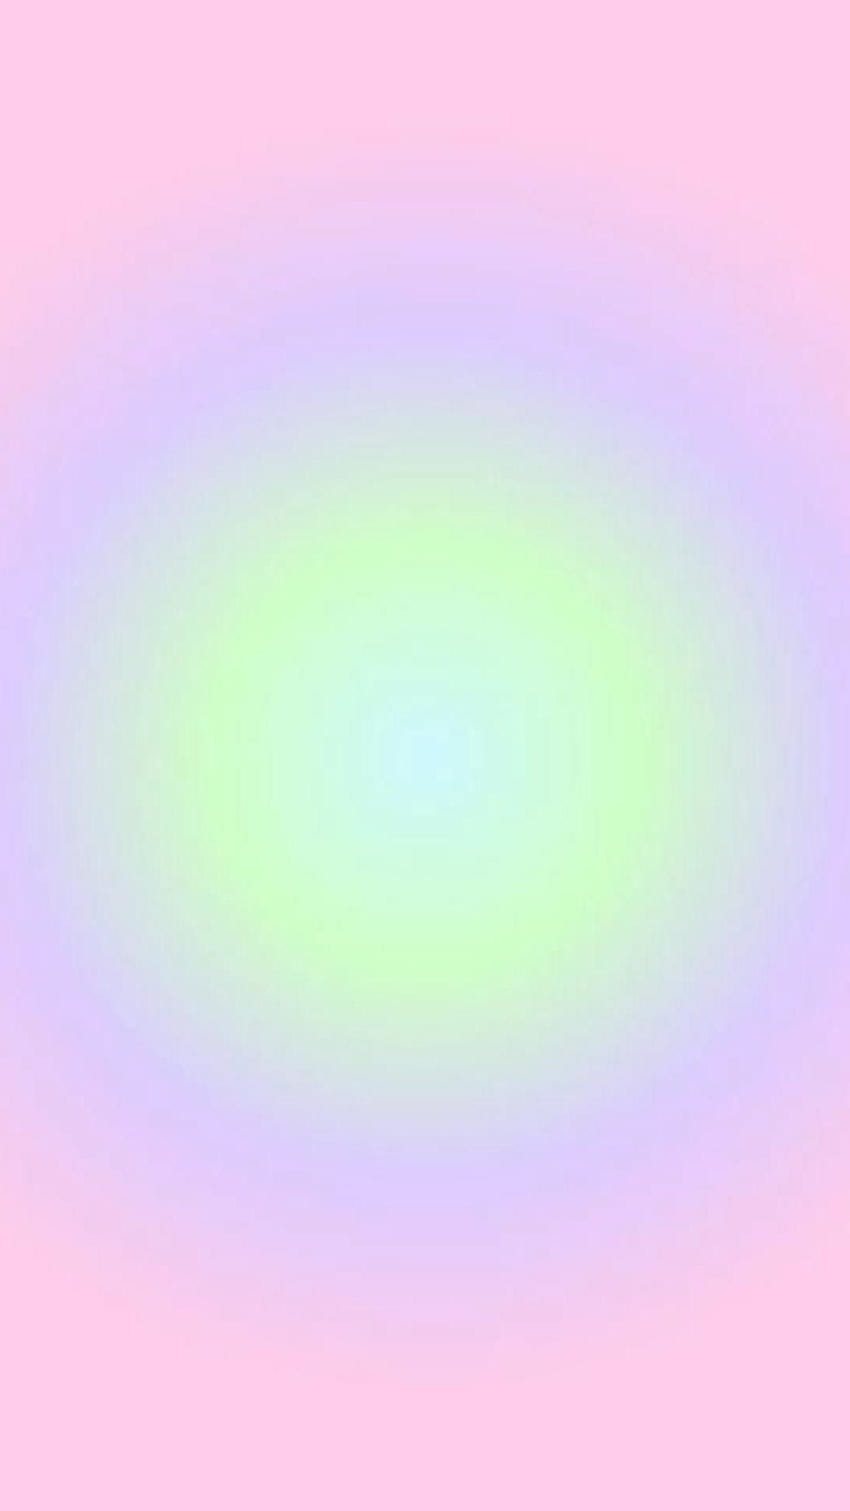 Free Holographic iPhone wallpaper pastel gradient  Free Photo  rawpixel   nohatcc